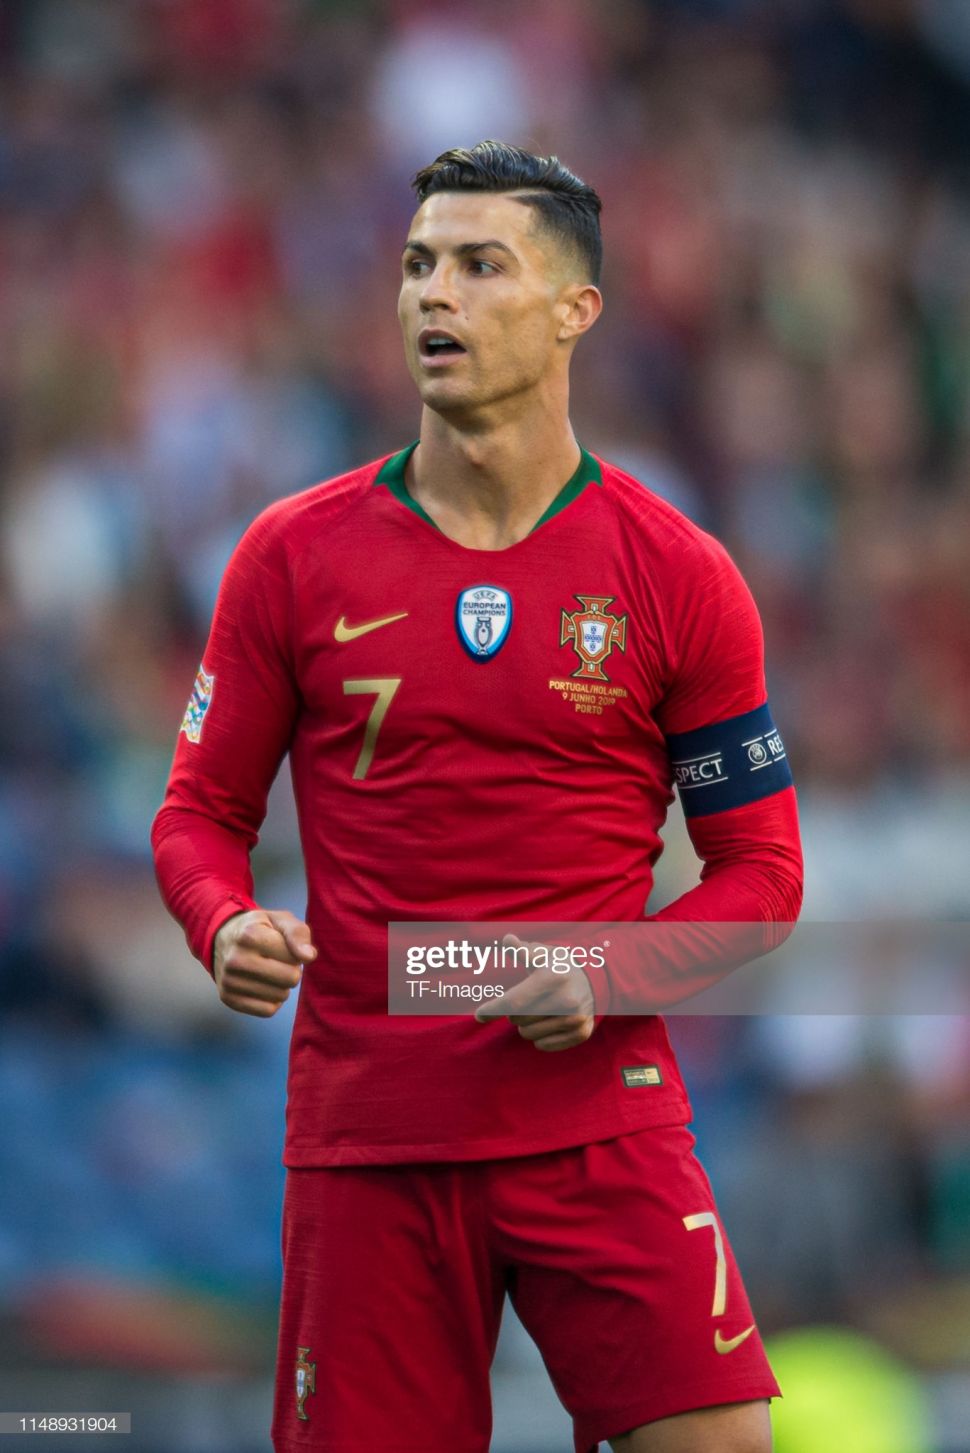 Áo đấu Ronaldo 7 Portugal 2018-2019 home Nation League jersey 893877